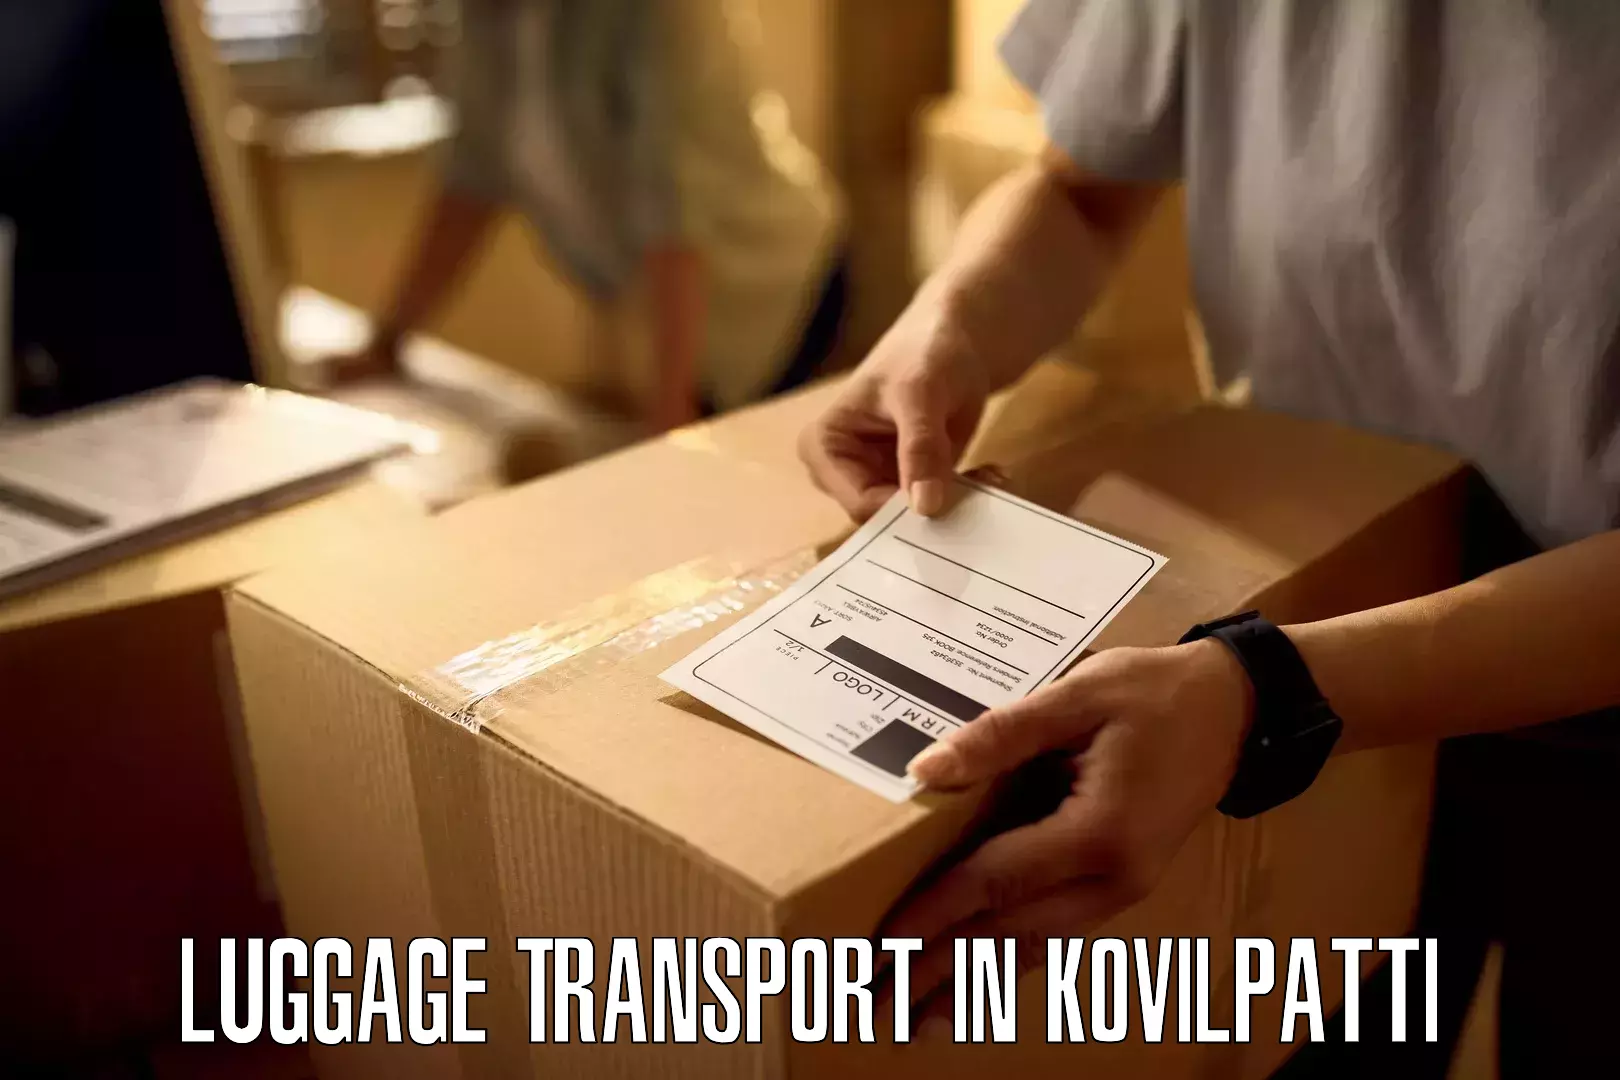 Luggage shipment specialists in Kovilpatti